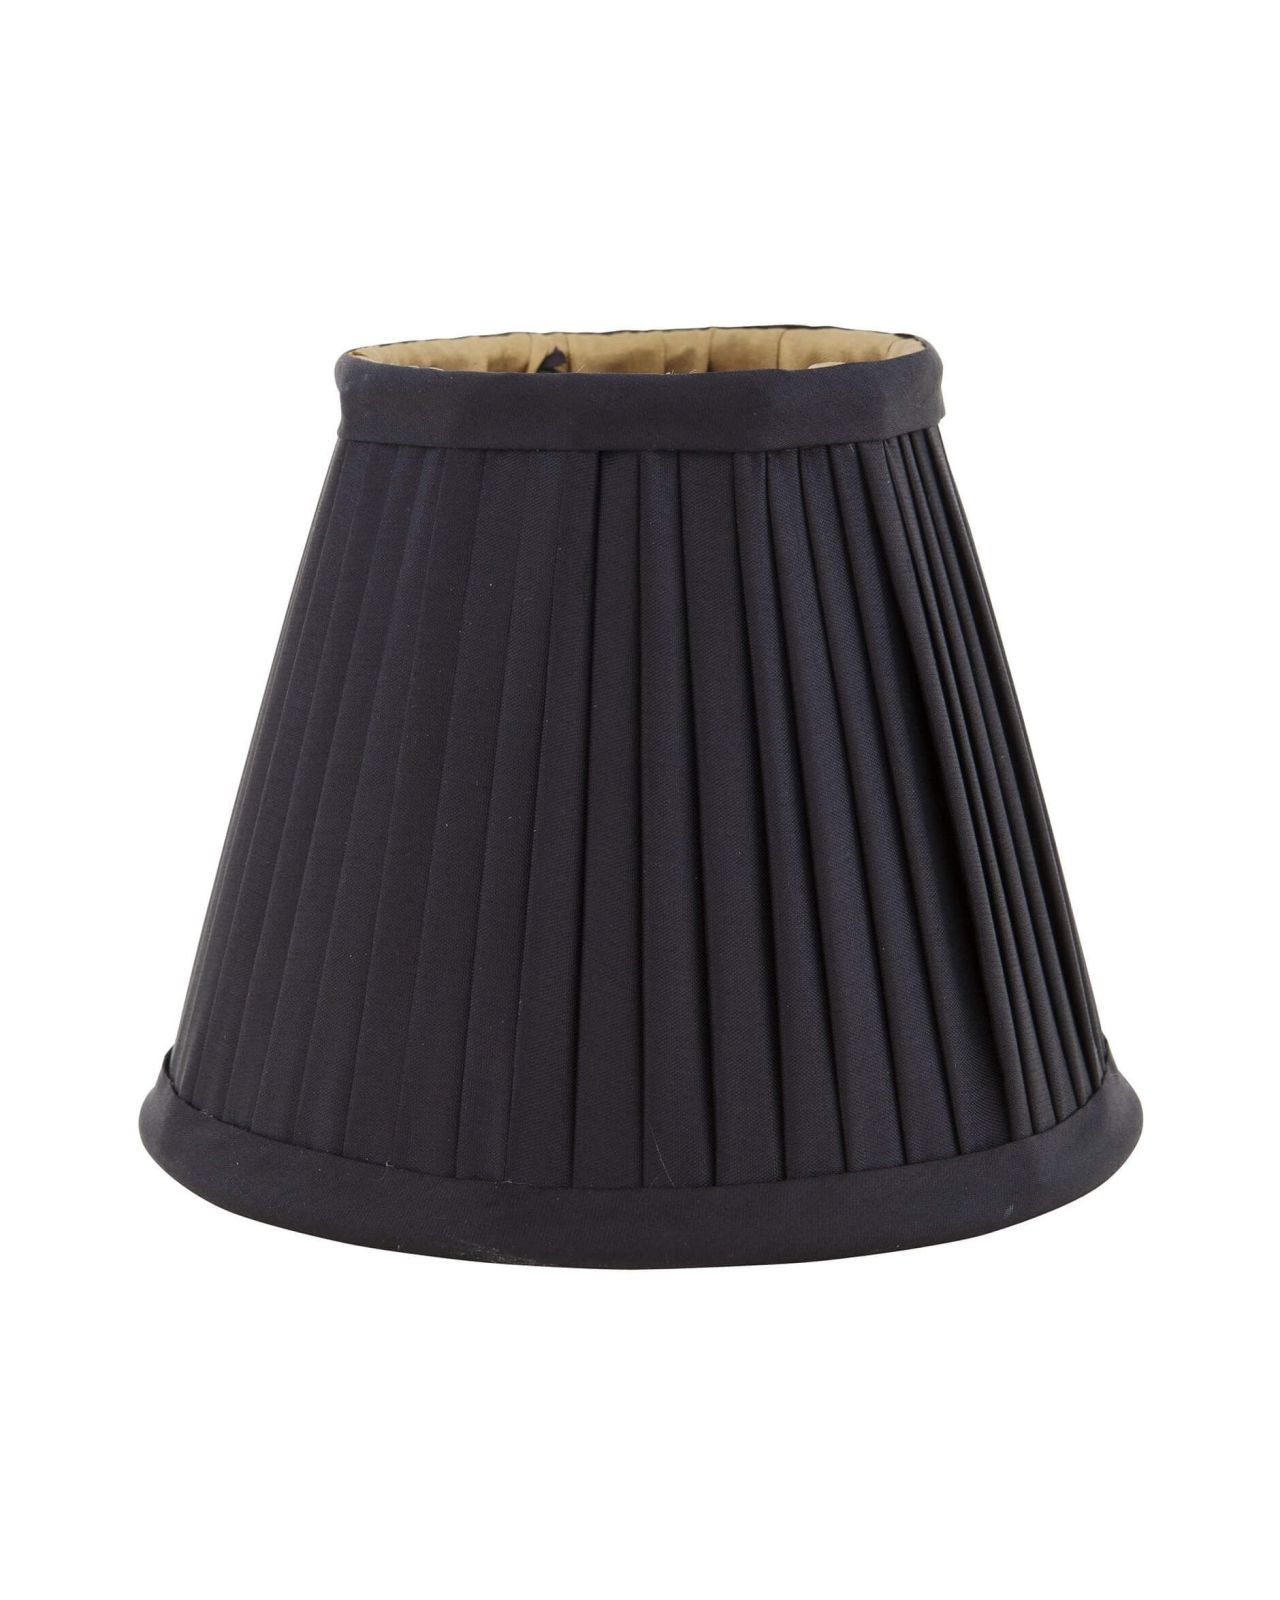 Vasari lampshade mini black